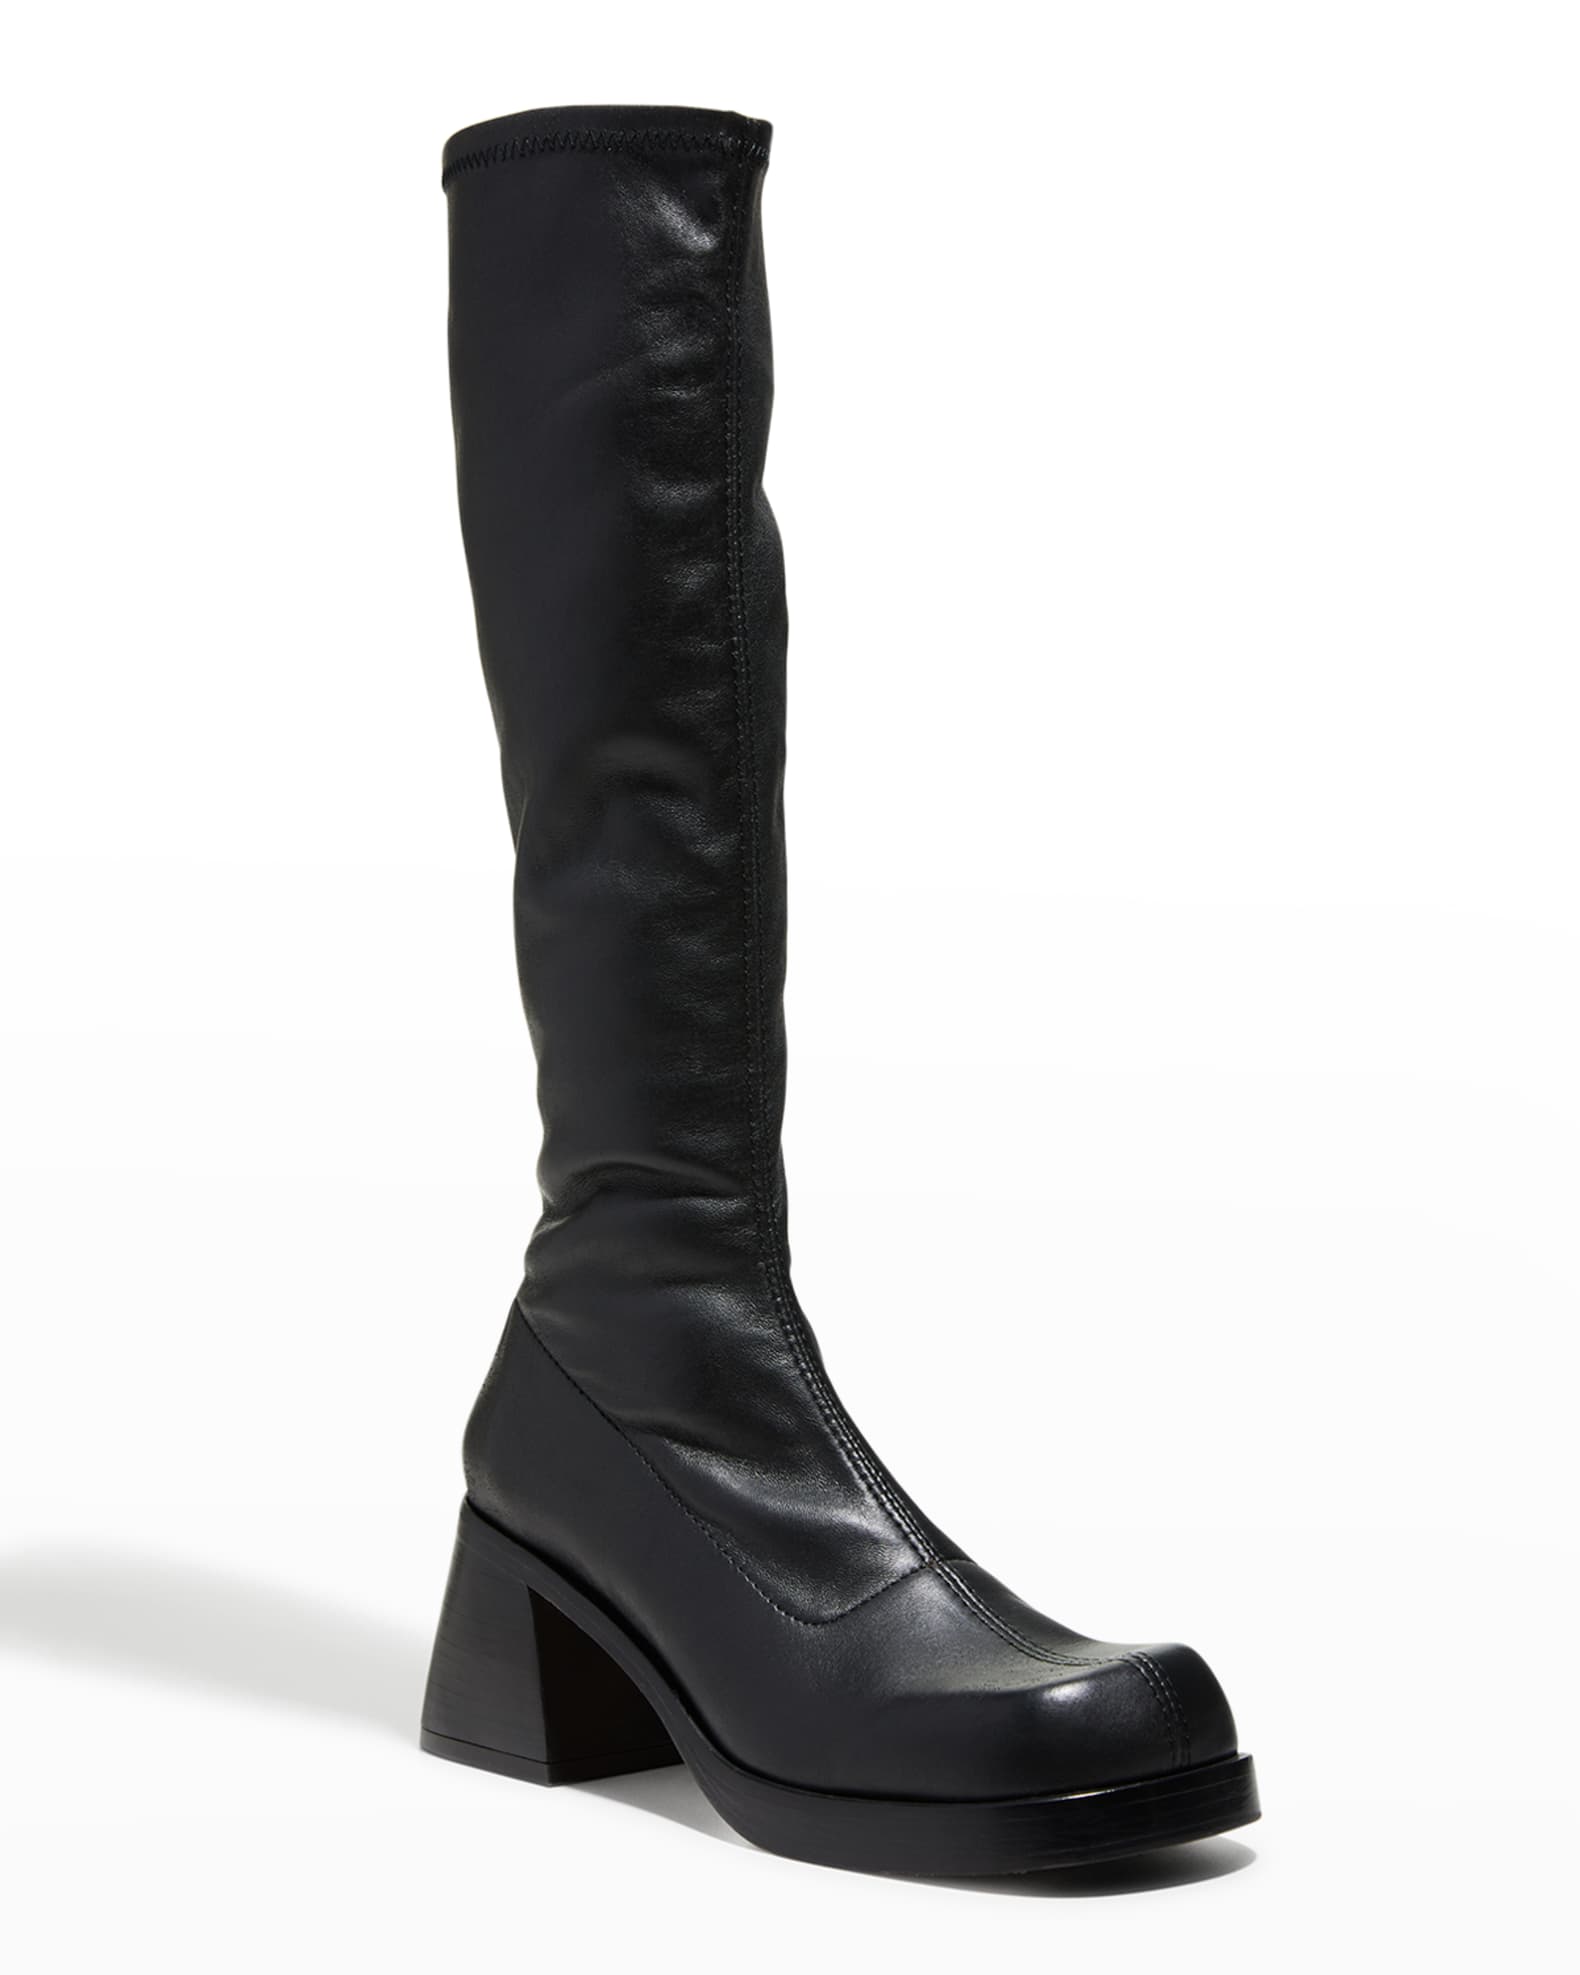 Miista Hedy Tall Leather Boots | Neiman Marcus